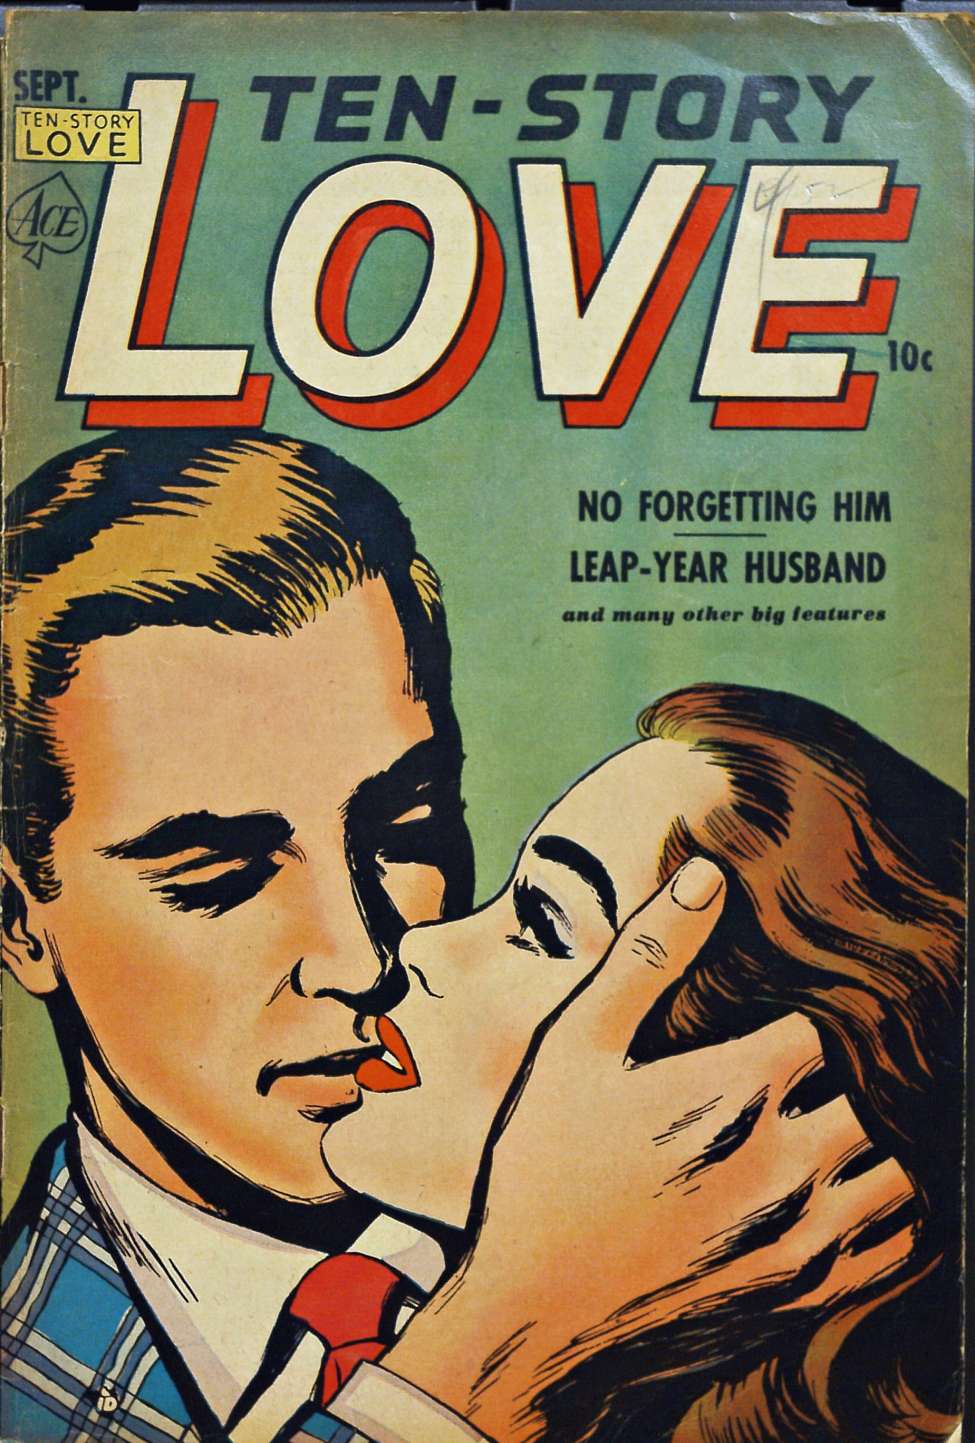 Book Cover For Ten-Story Love v30 4 (184)